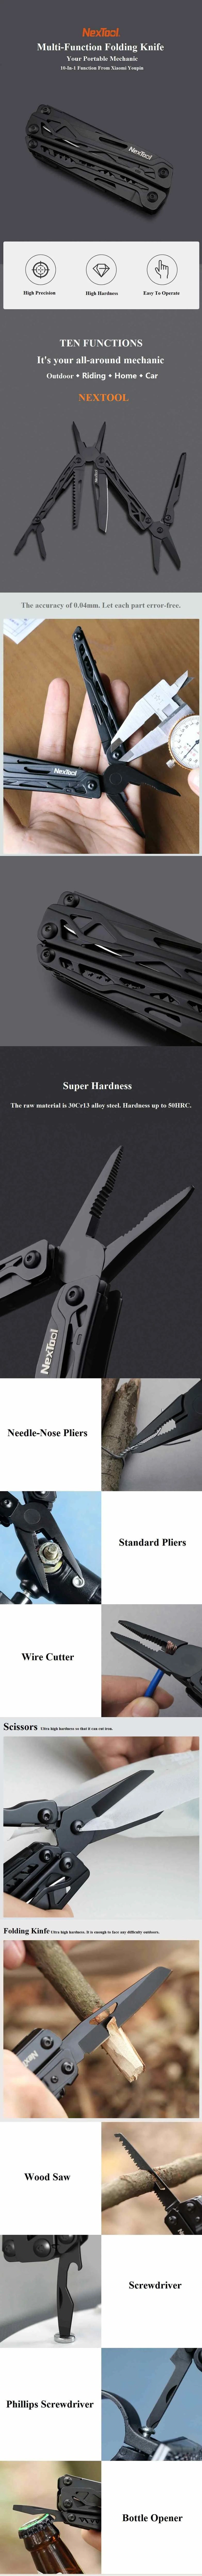 NexTool Multi-function knife